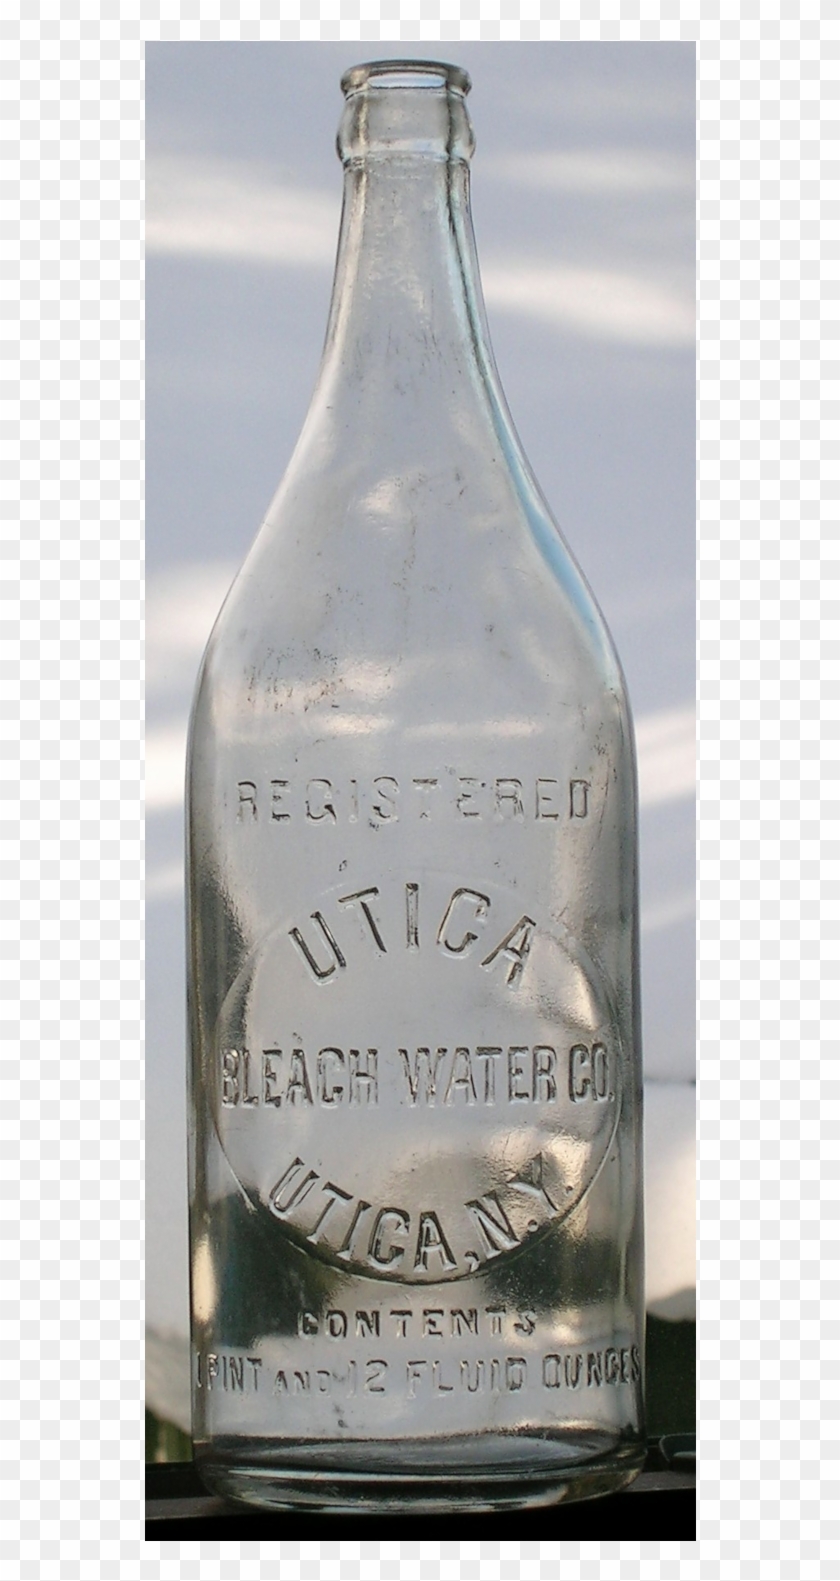 Utica Bleach Water Co - Glass Bottle Clipart #1143441